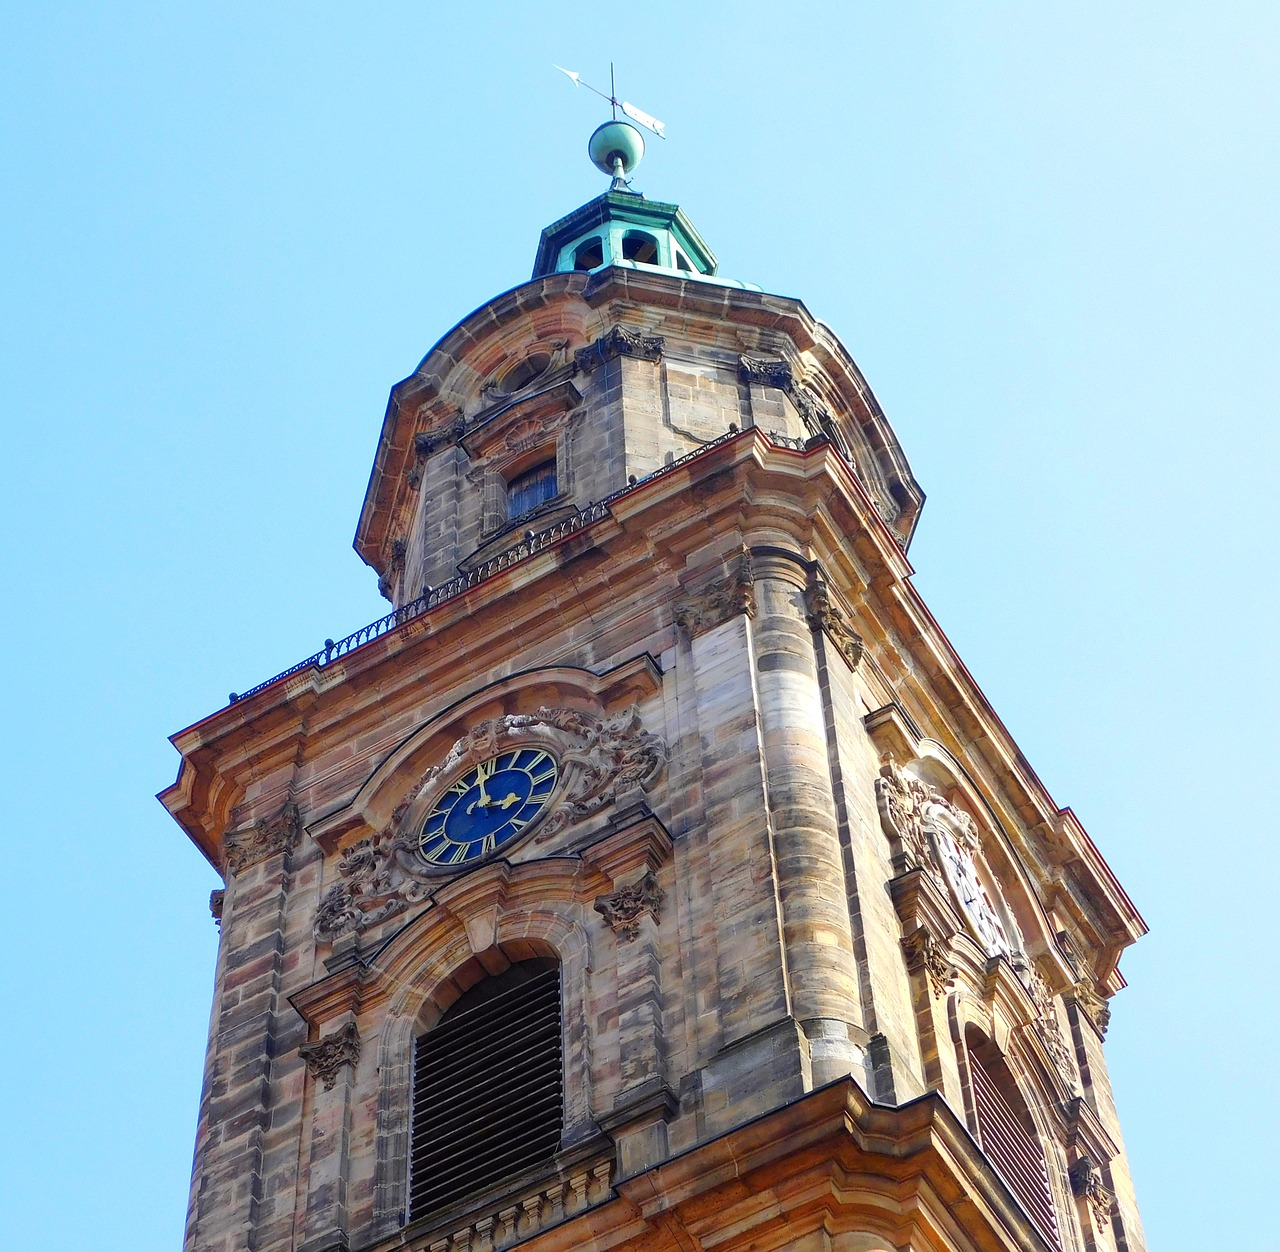 neustädter kirche steeple clock tower free photo